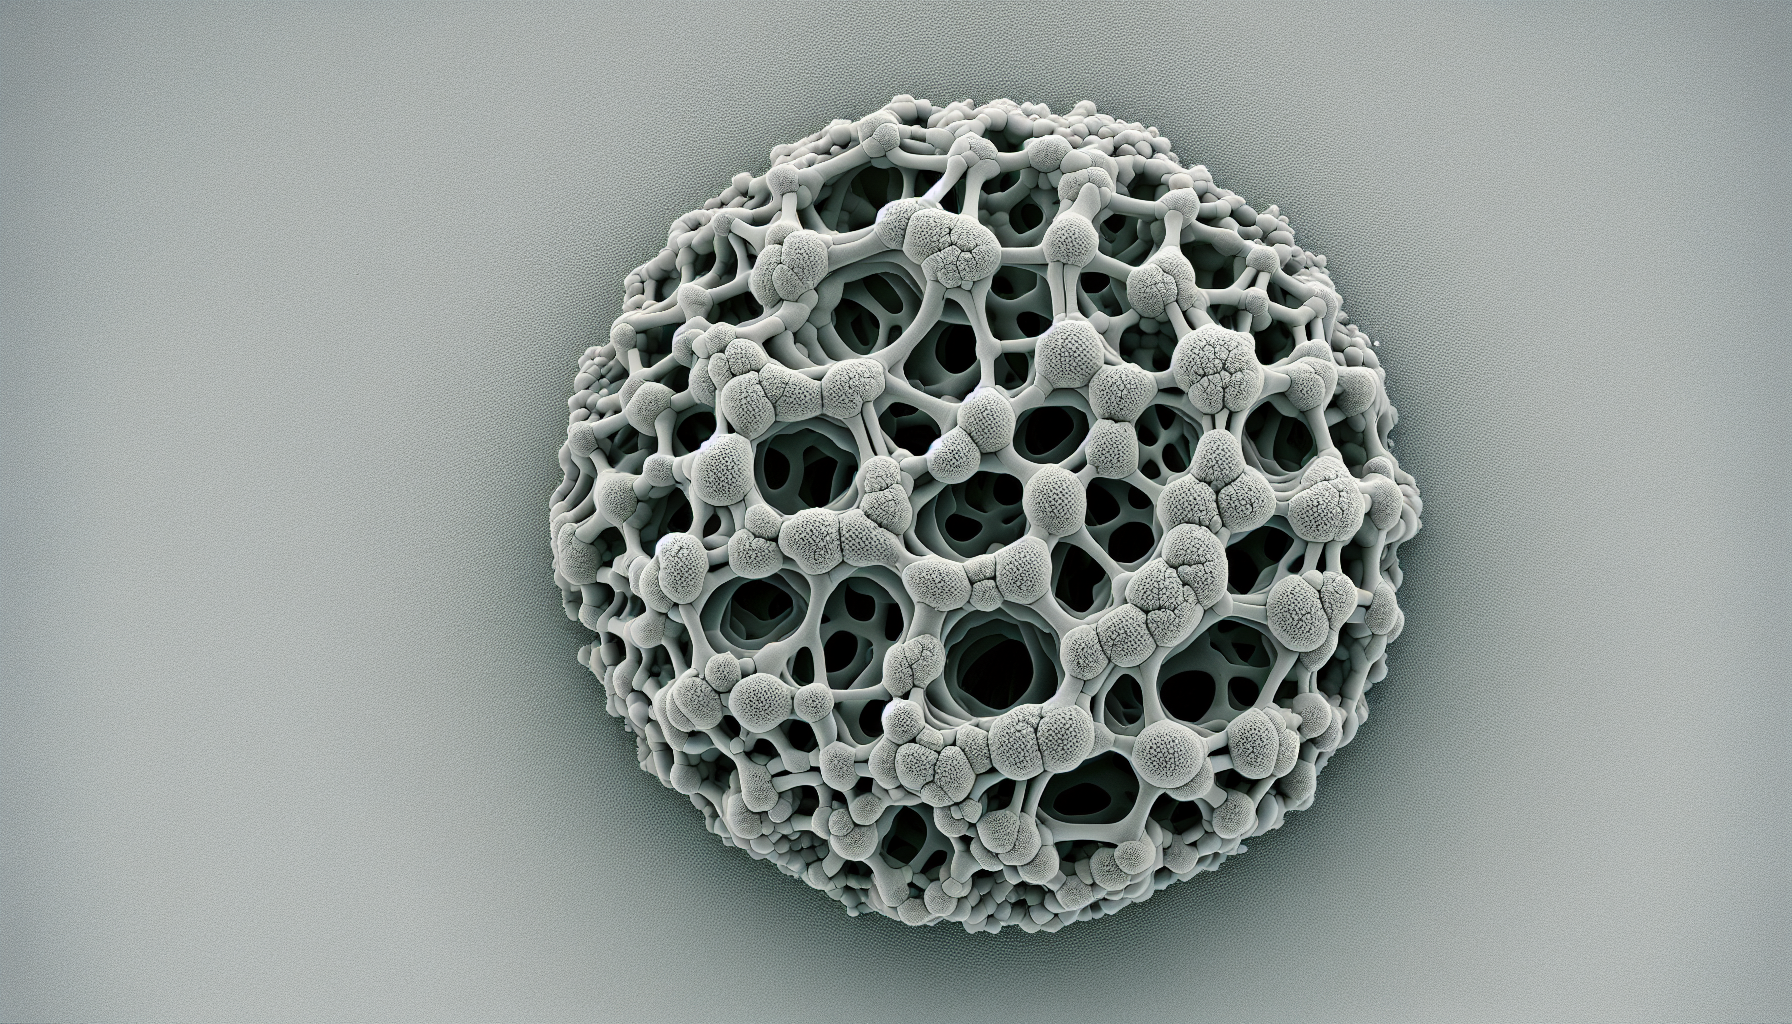 Microscopic view of porous concrete structure